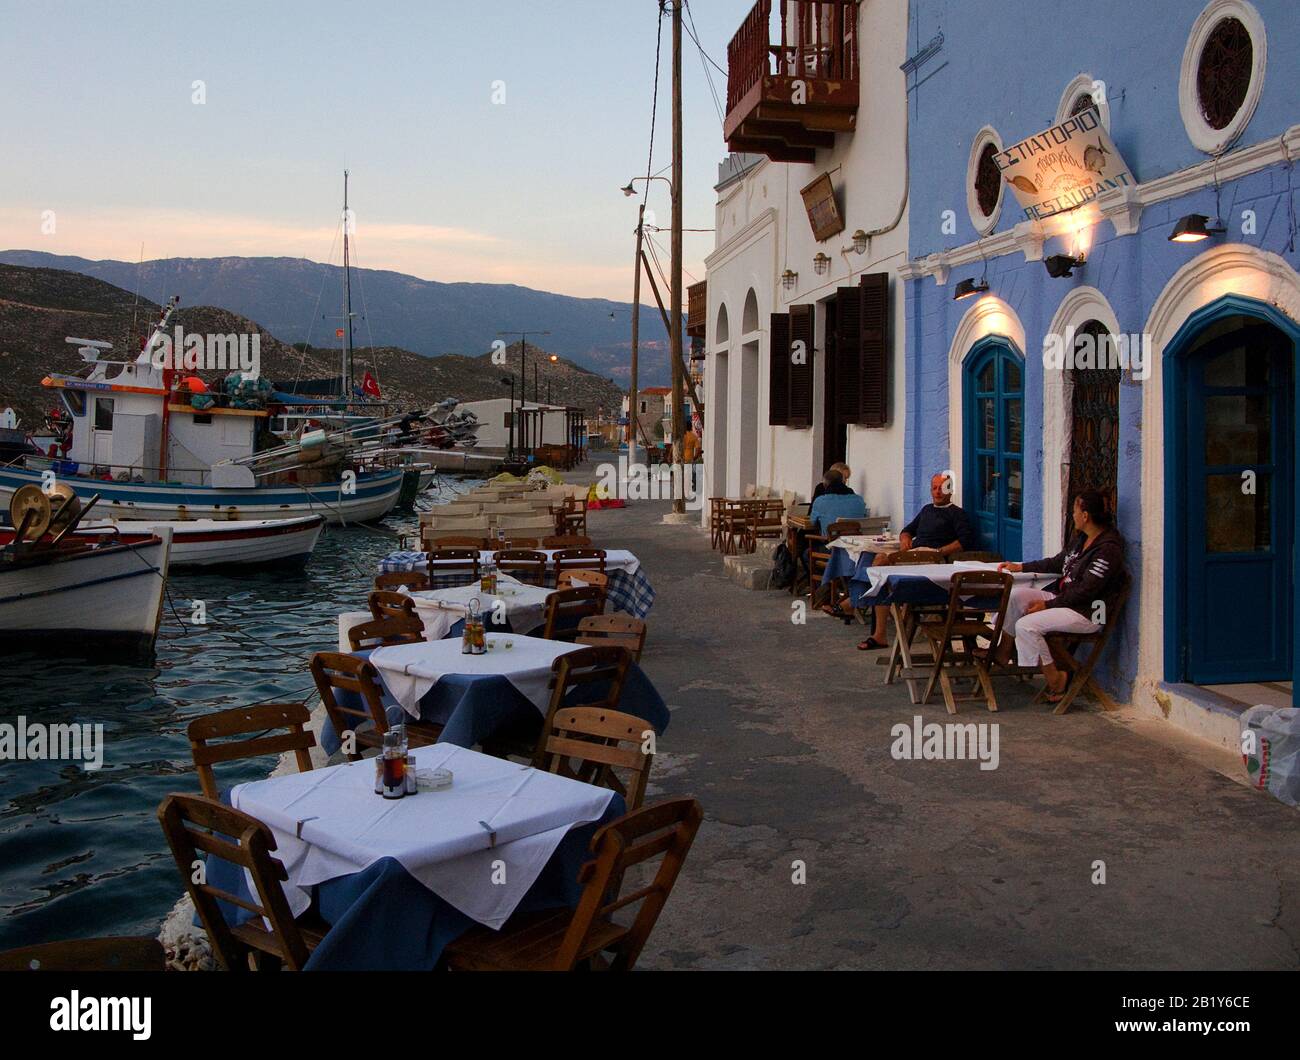 Evening mood at Meis island, also known as Kastellorizo, harbour restaurant on Meis island, Greece Stock Photo